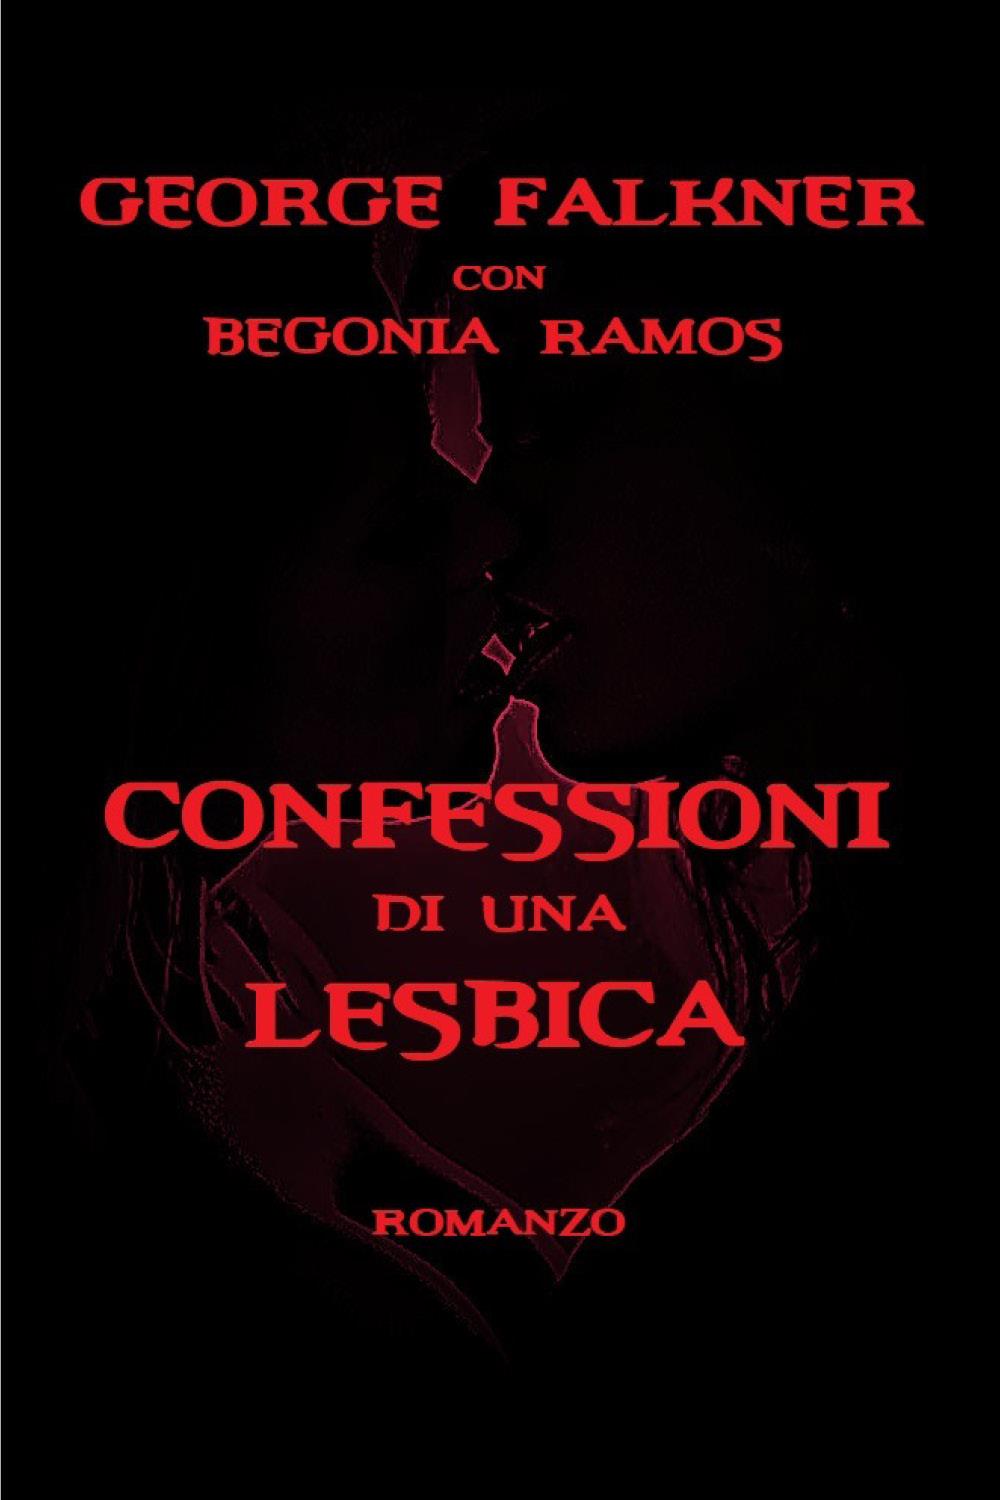 Confessioni di una lesbica